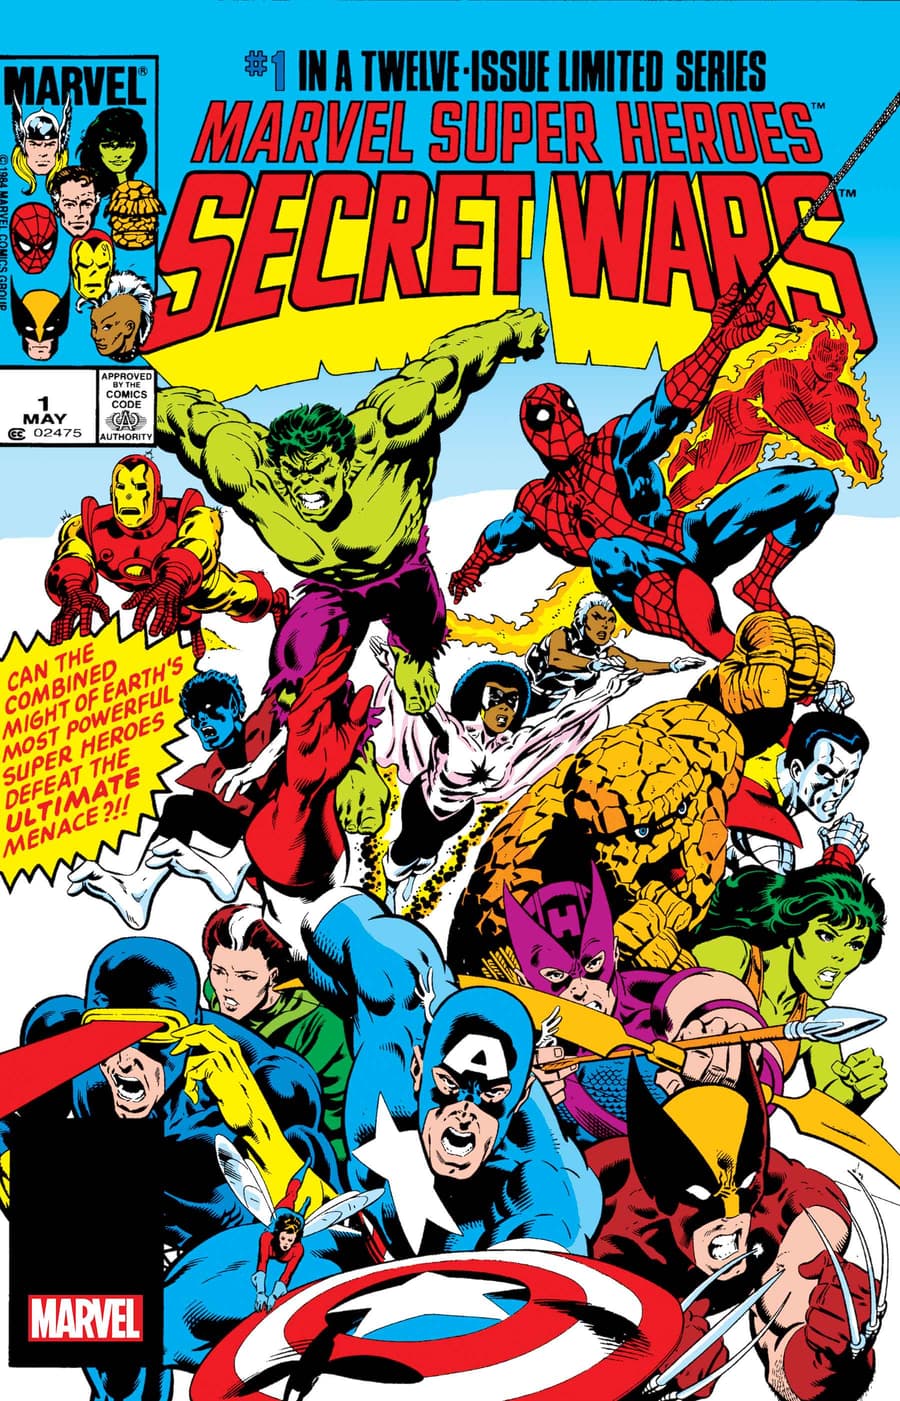 MARVEL SUPER HEROES SECRET WARS #1 FACSIMILE EDITION cover by Mike Zeck